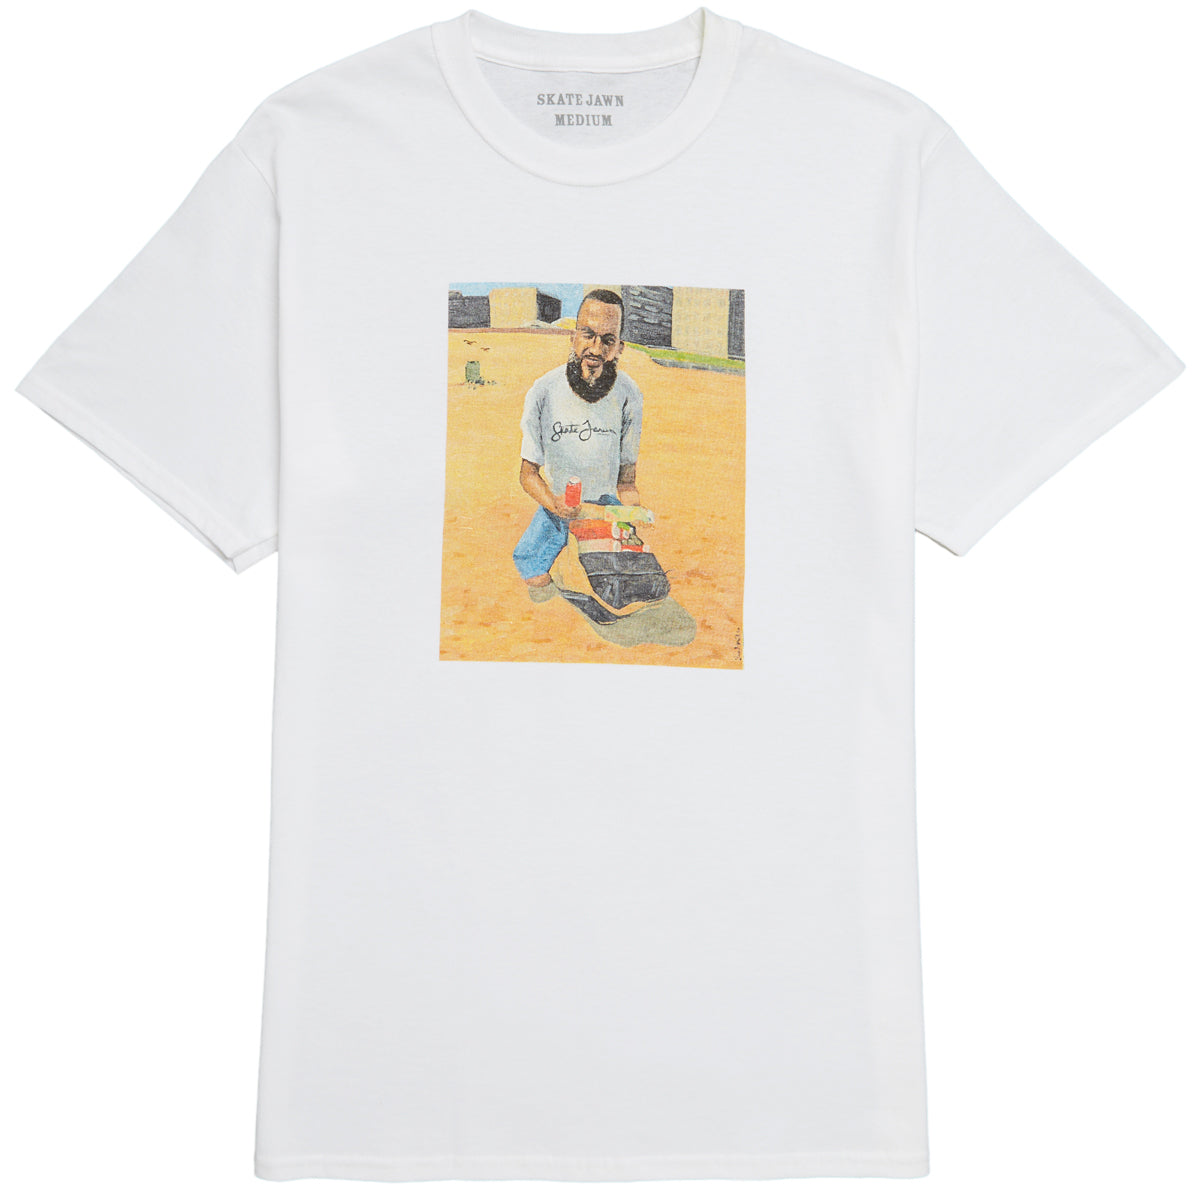 Skate Jawn Nutcracker T-Shirt - White image 1